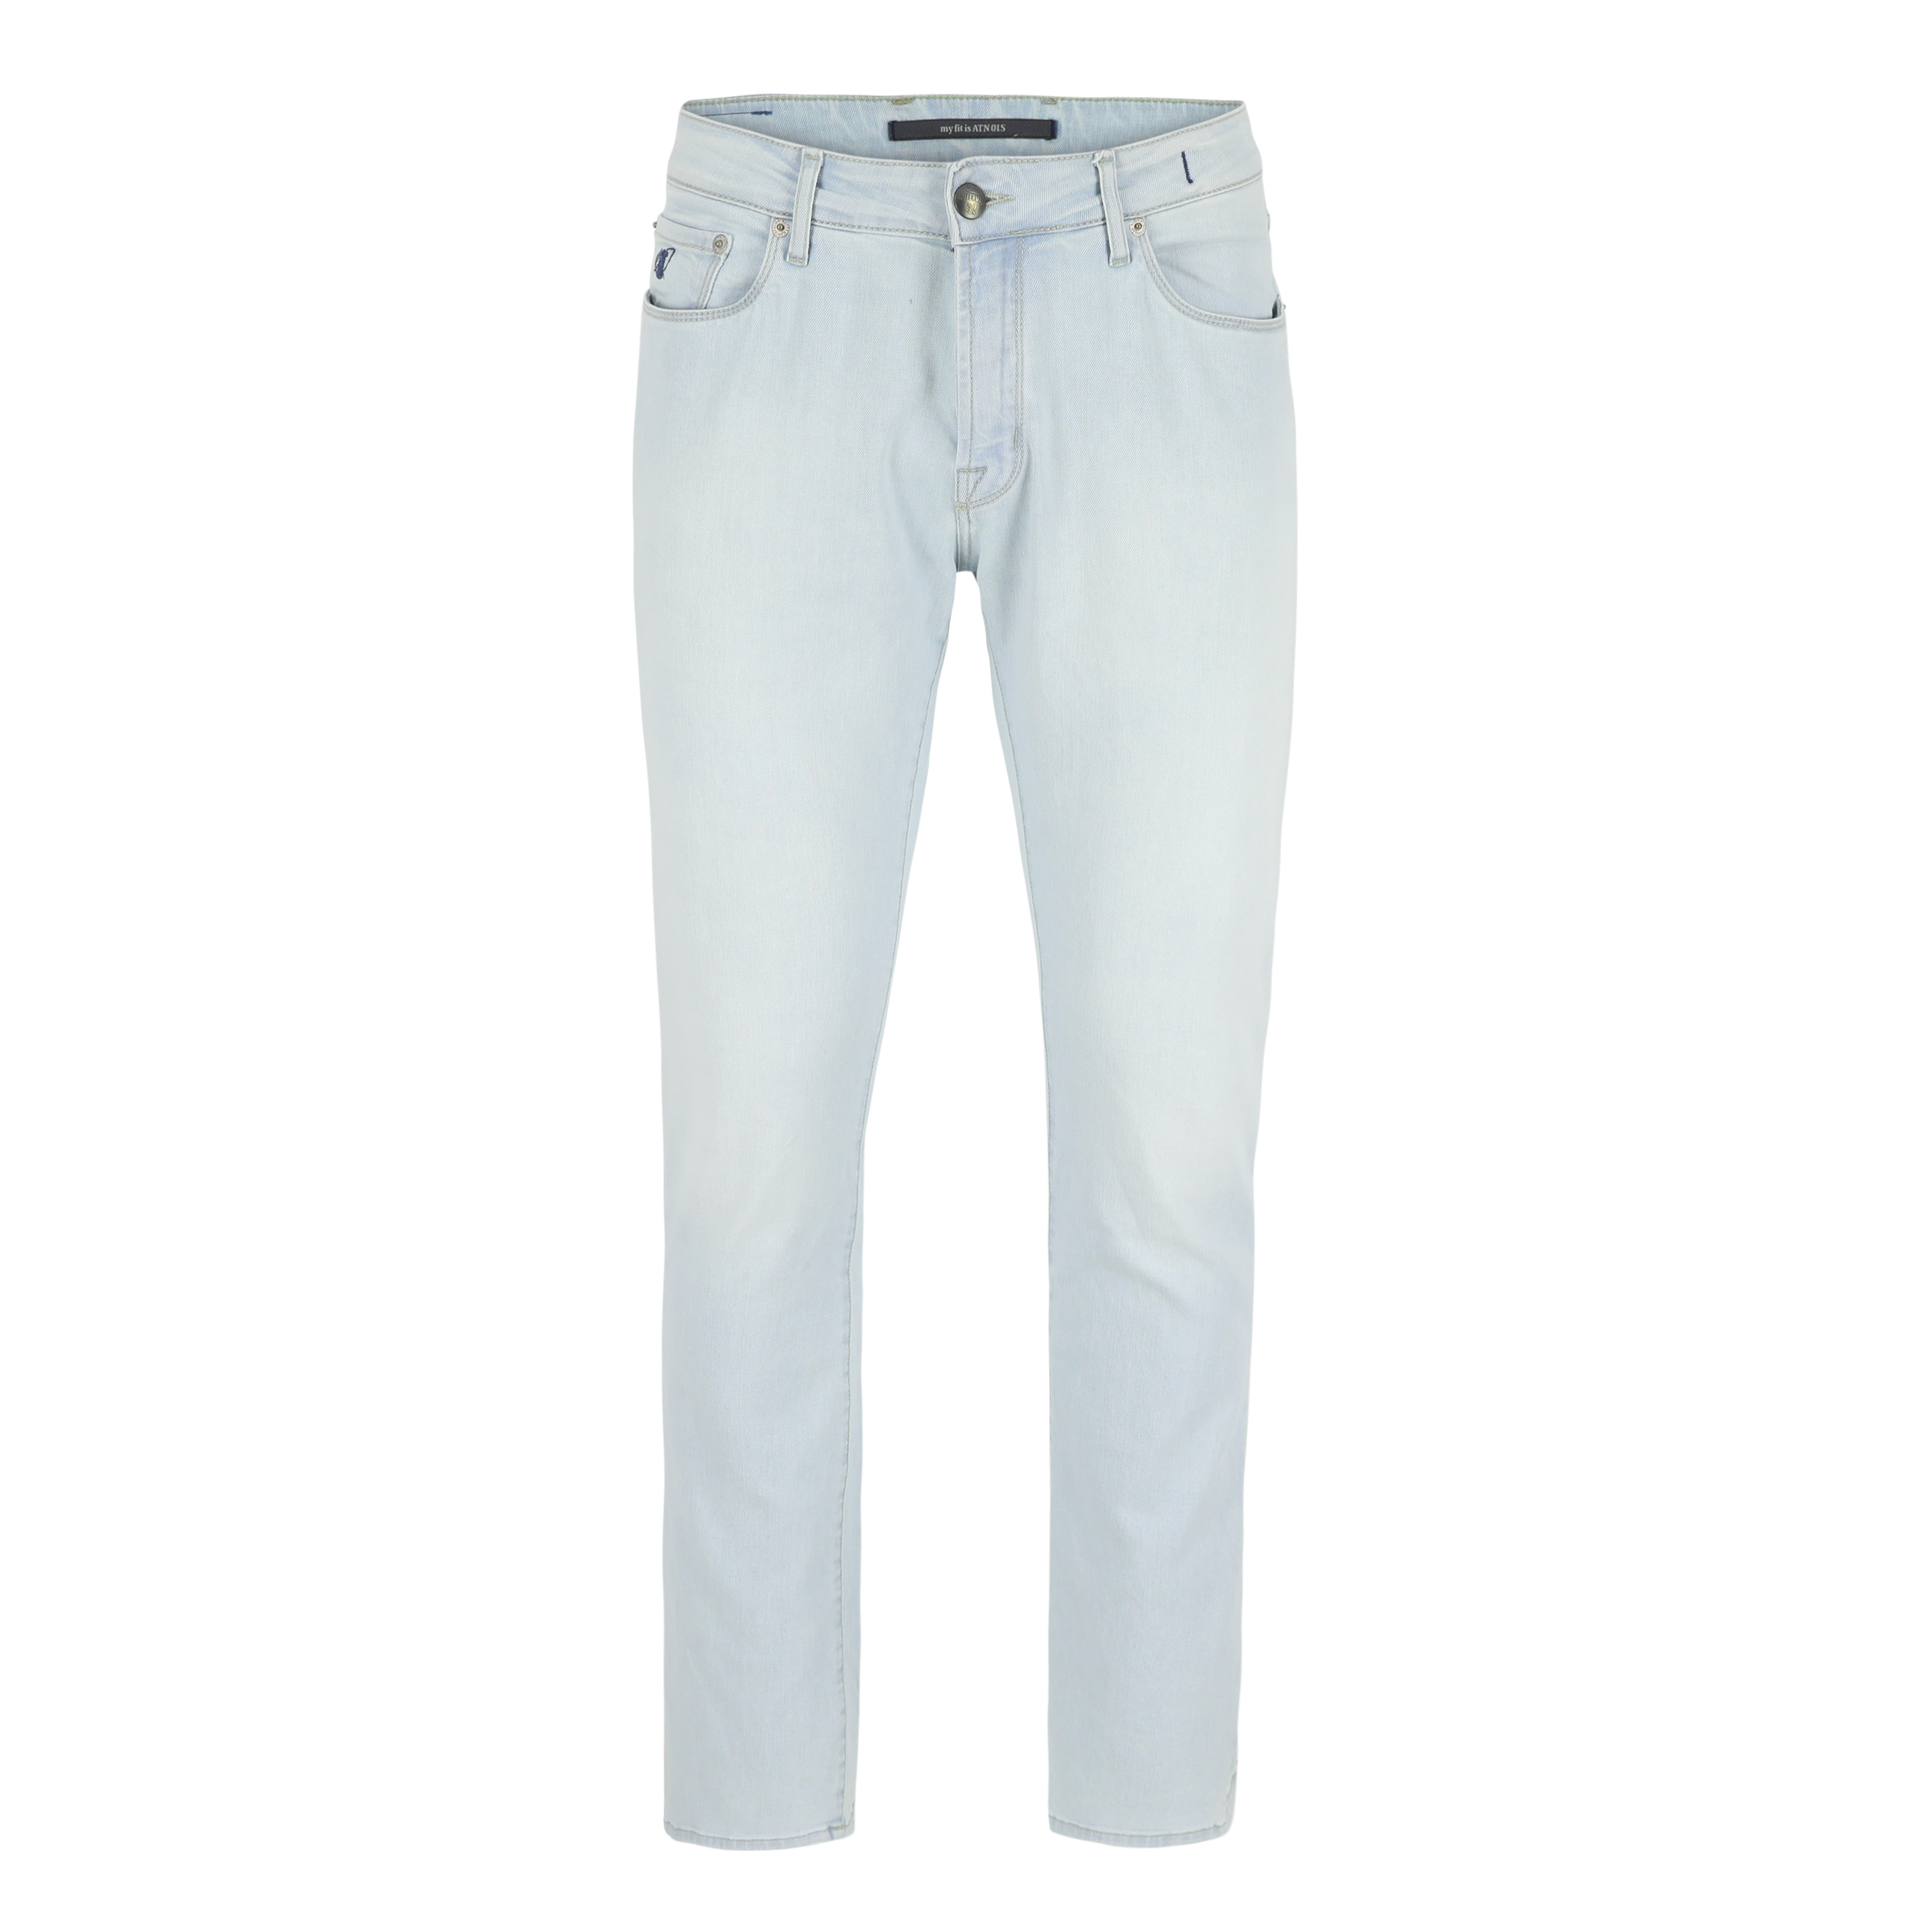 Atelier Noterman - jeans in blauwe denim in used wassing - 32/32 - Heren